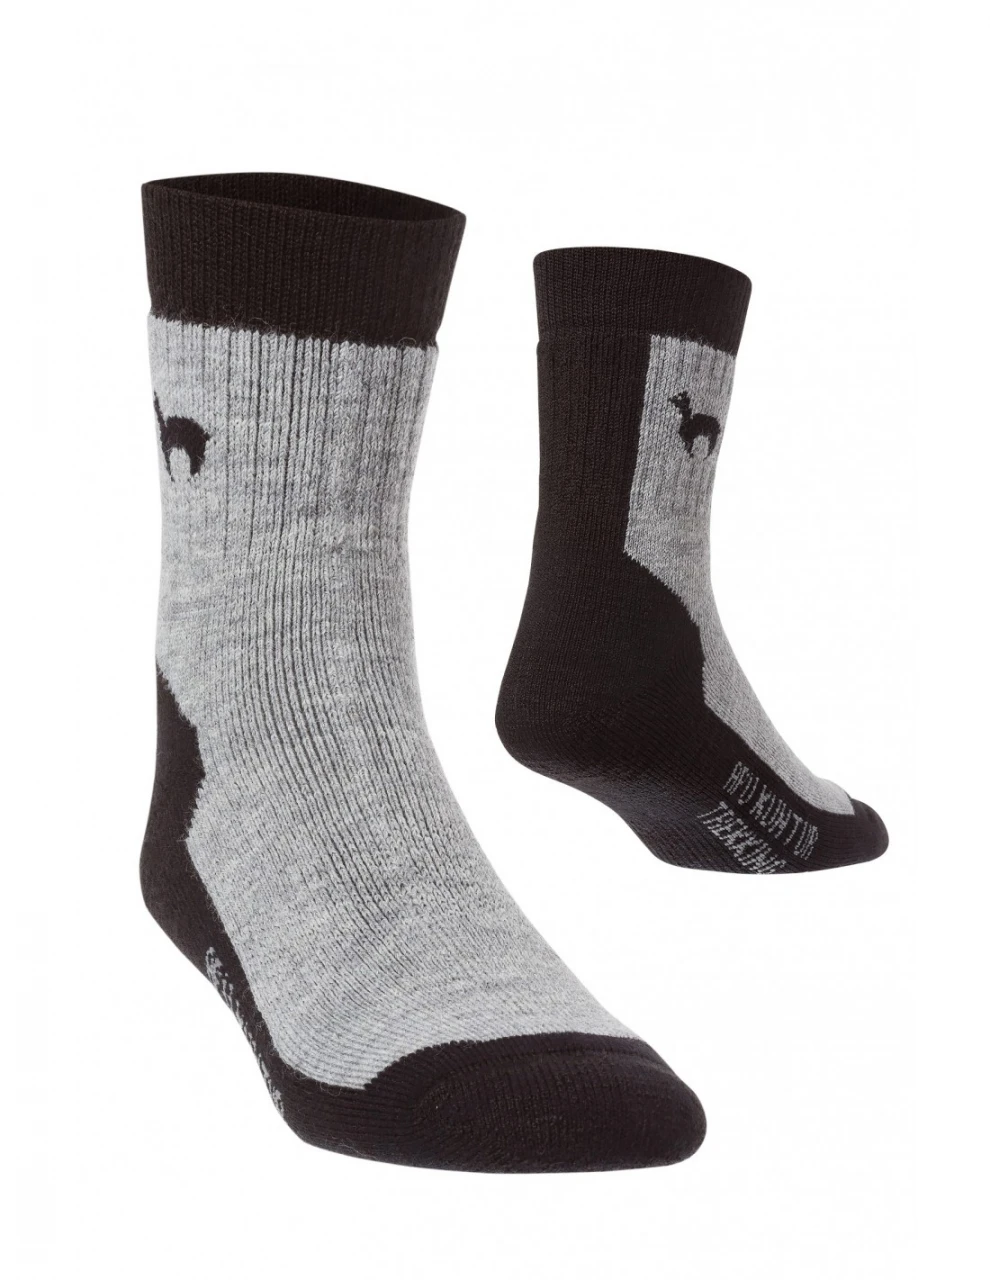 TREKKING socks for women and men in Alpaca and Wool blend